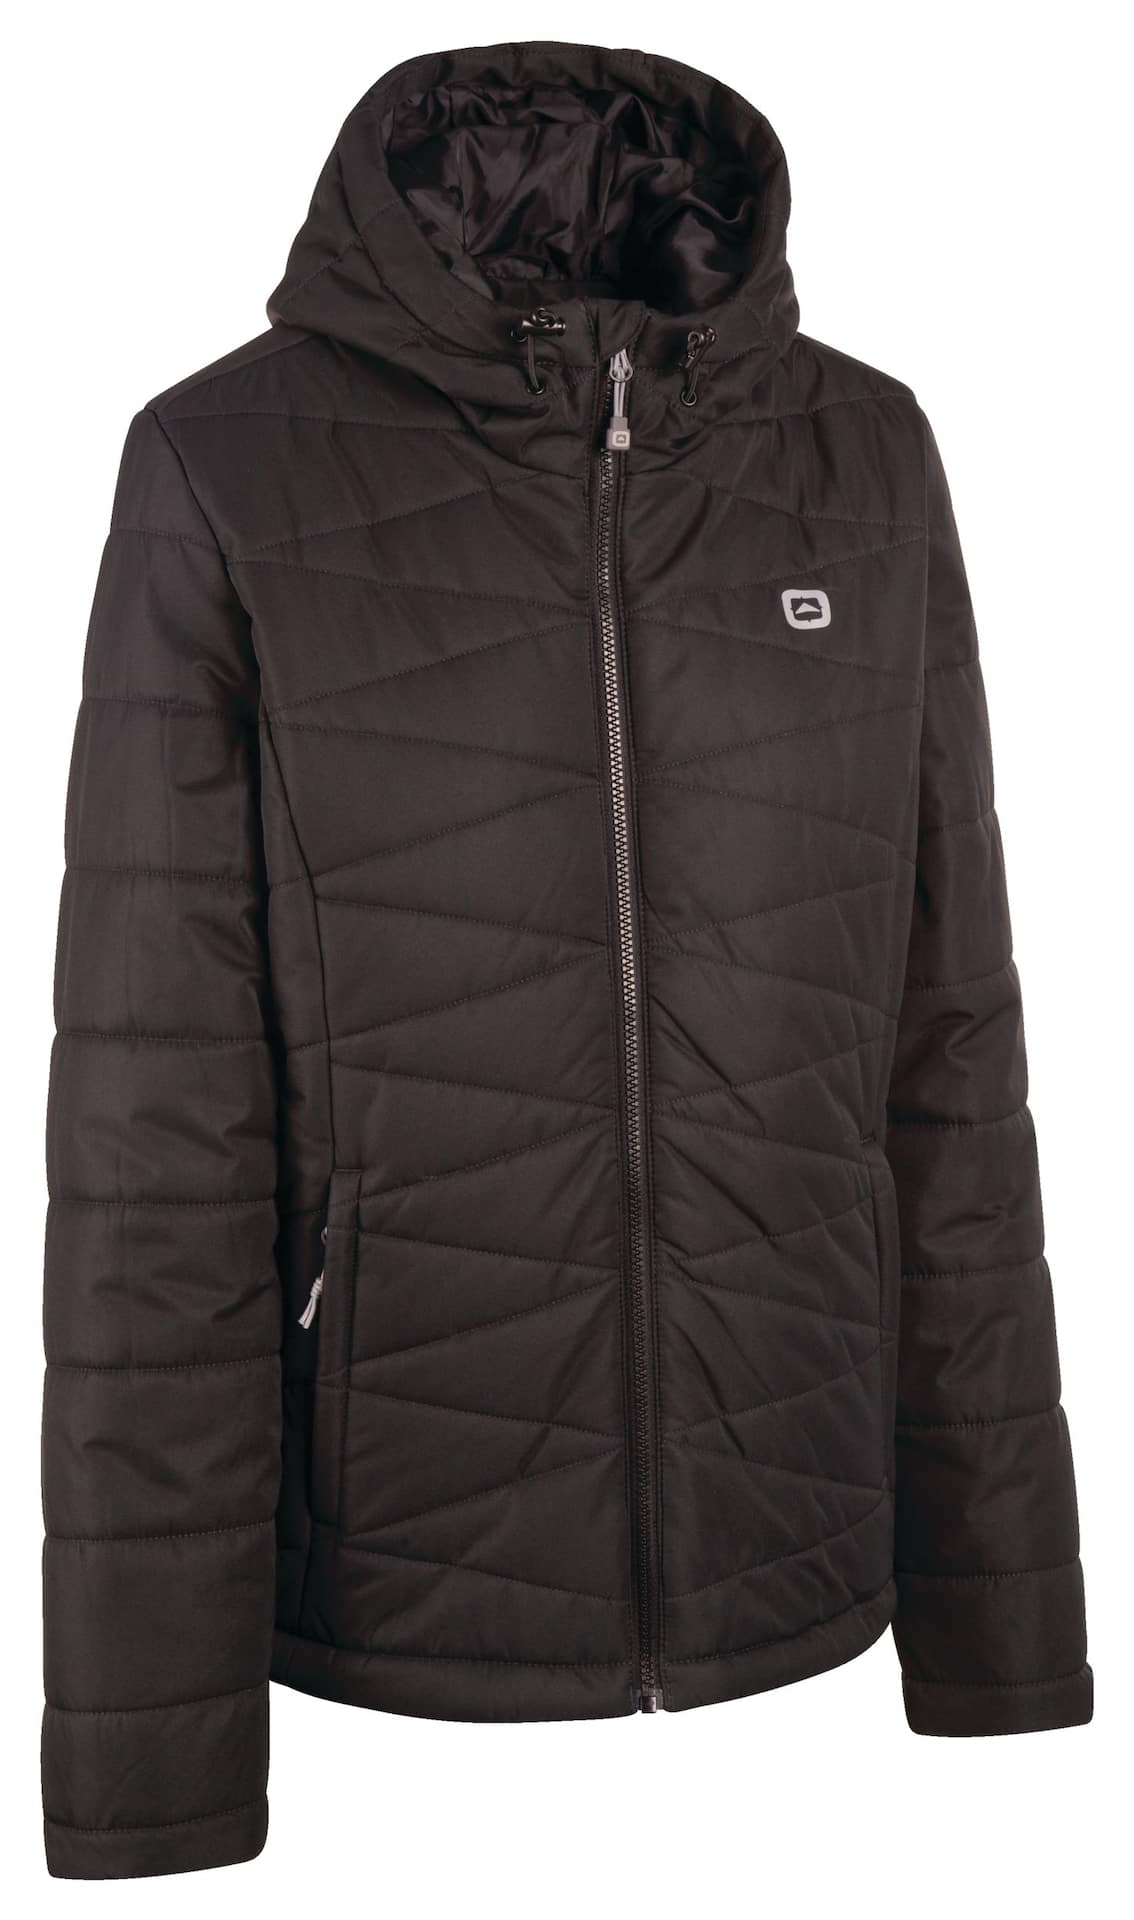 Outbound Women's Sadie Warm Comfortable Fleece Jacket with Full Zip, Blue